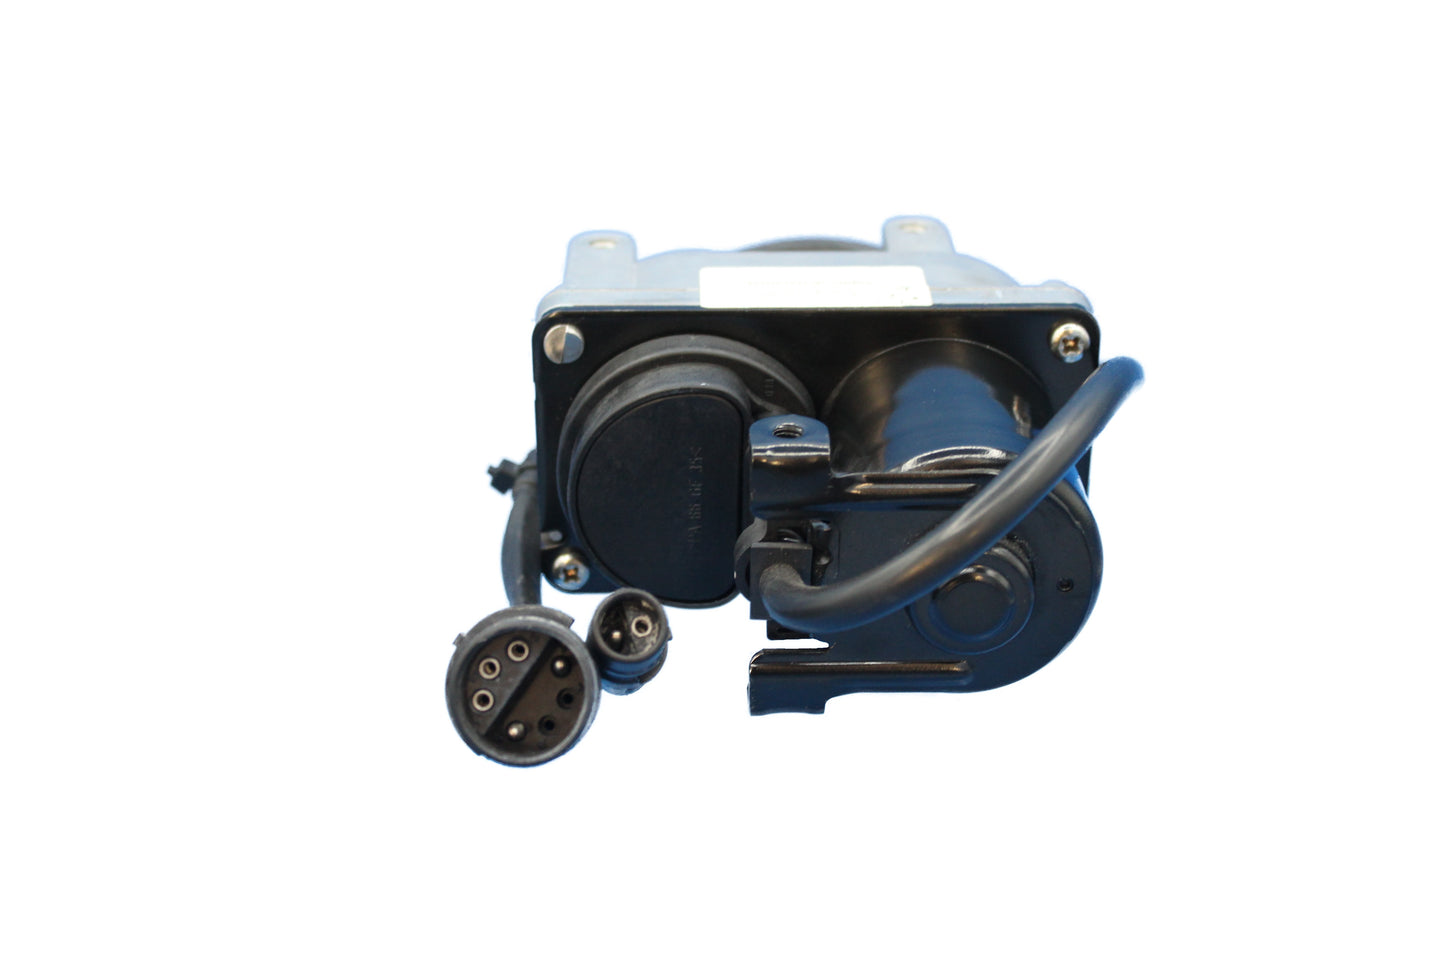 Servomotor Ems 3.3 Nuevo Bosch 0 206 002 018 - 500337521